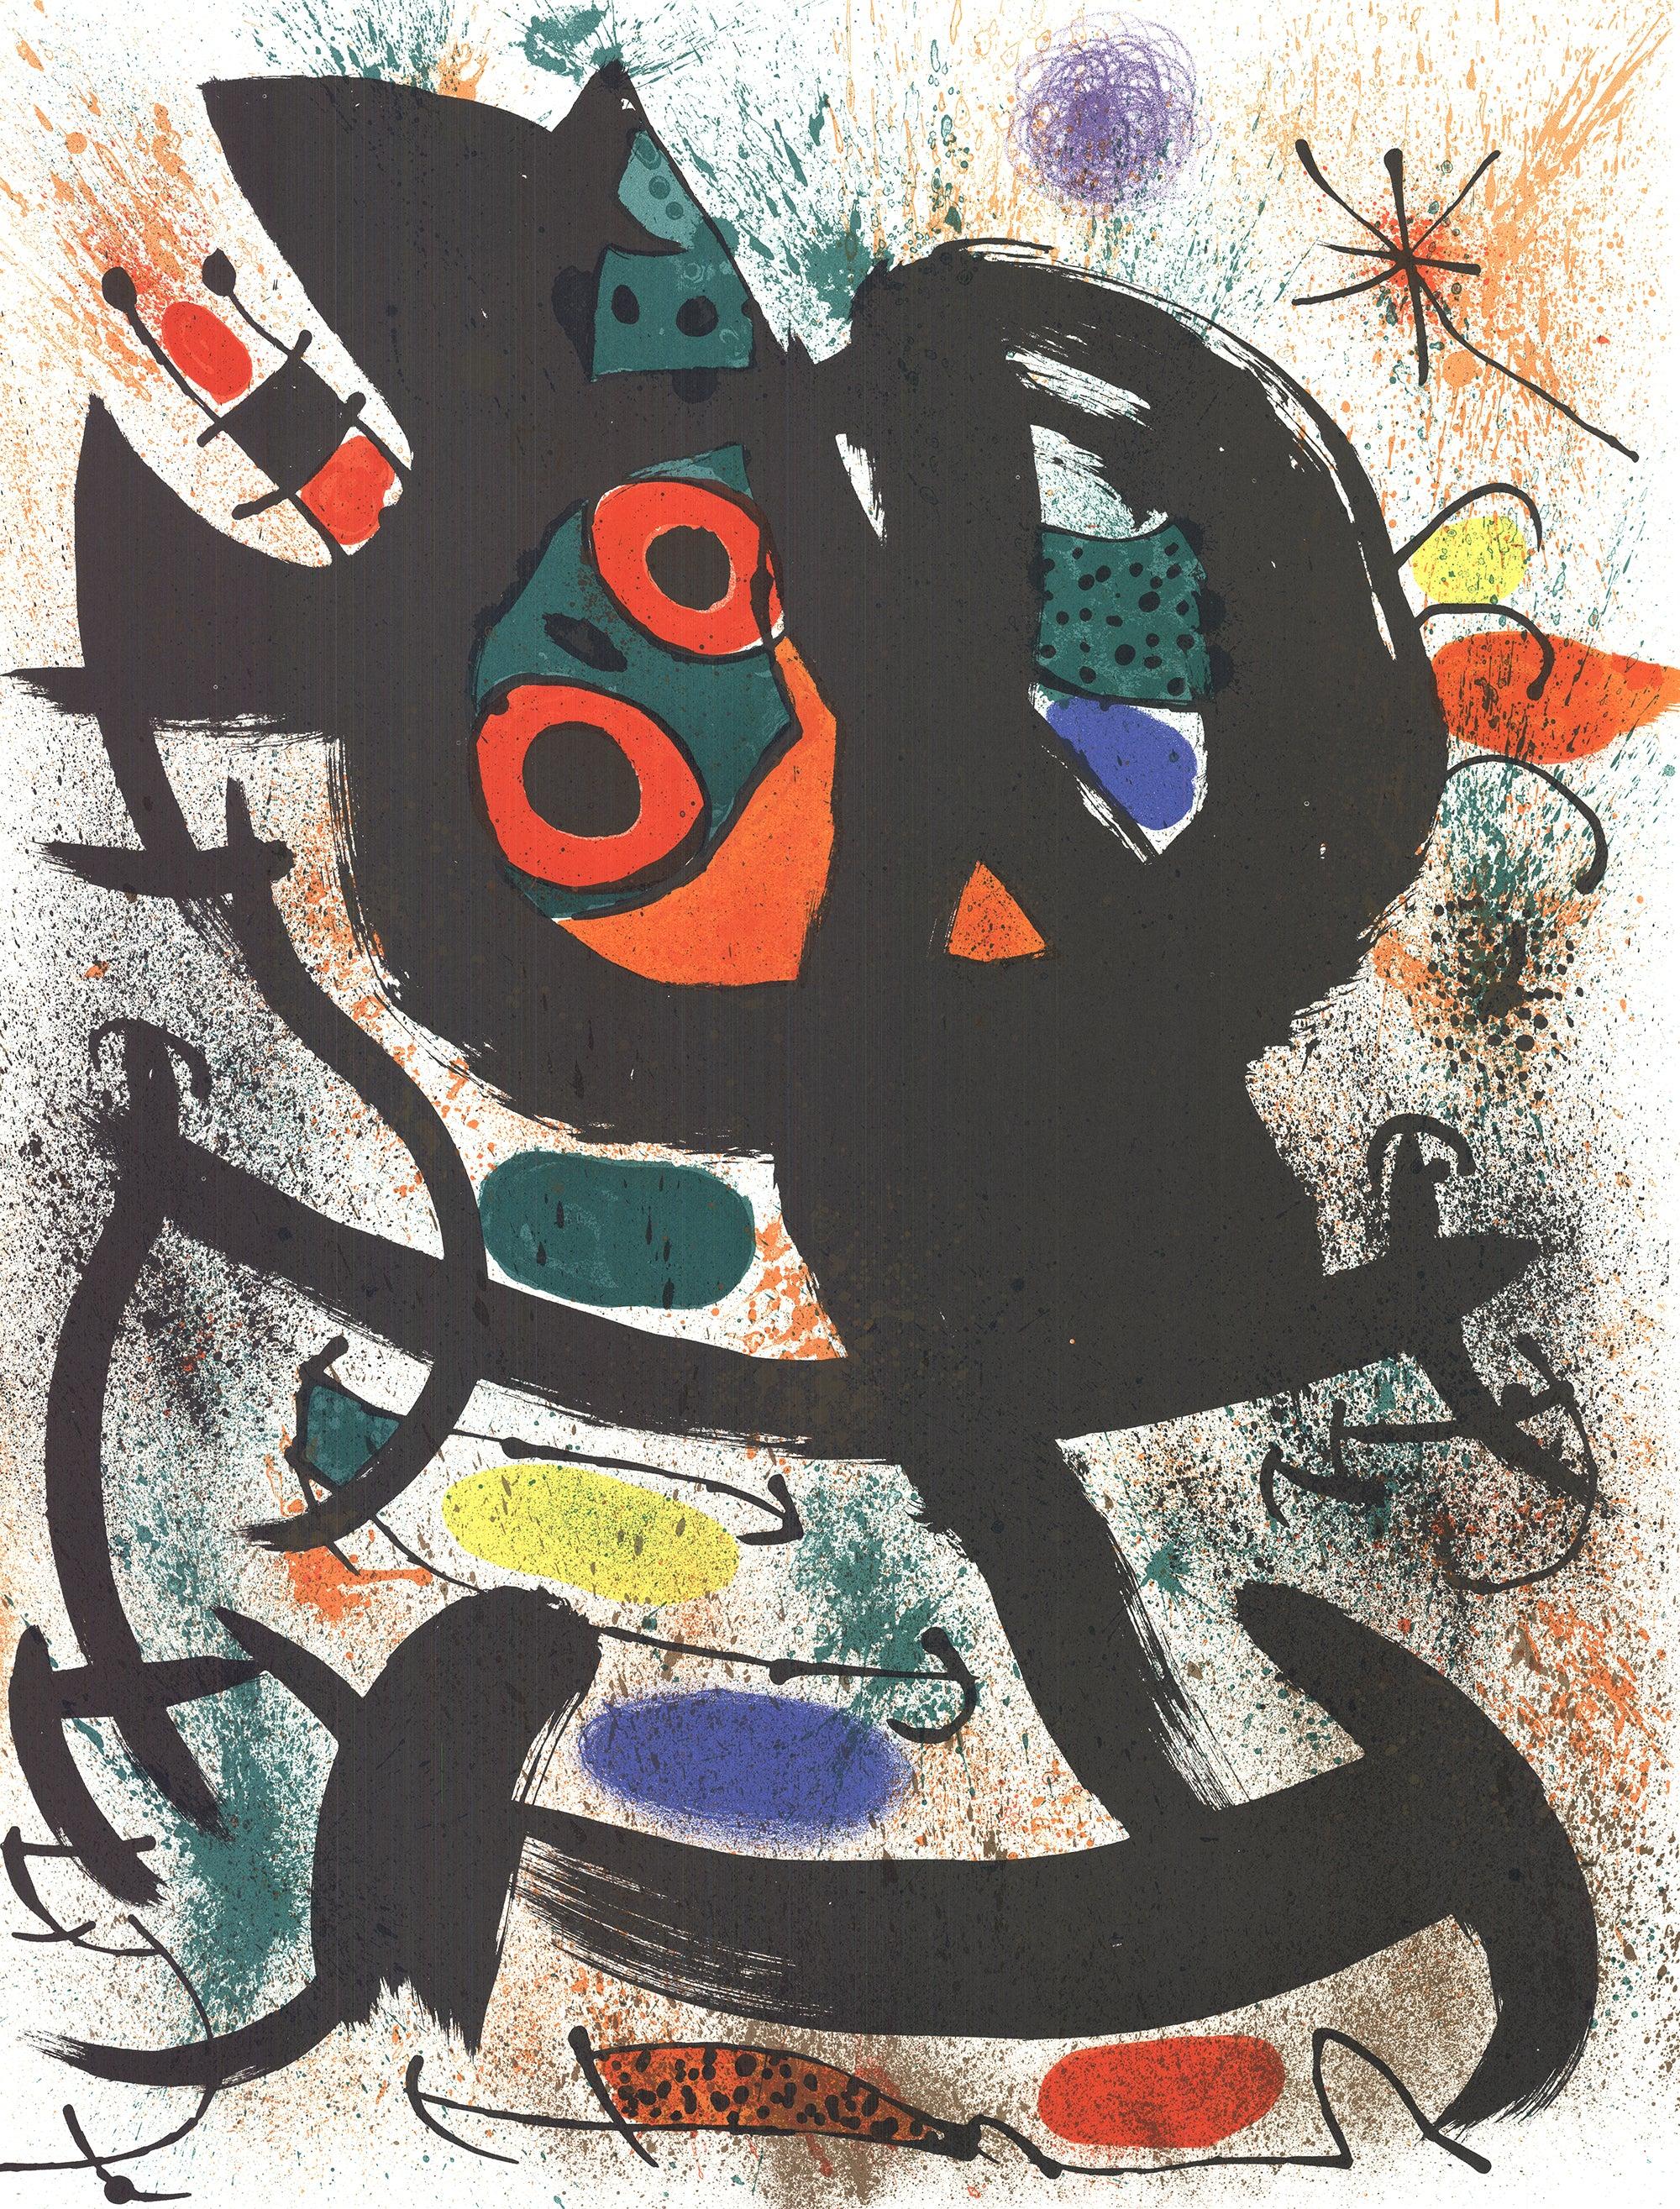 Joan Miro 'Pasadena Art Museum Exhibition' 1969- Original Poster - Abstract Print by Joan Miró